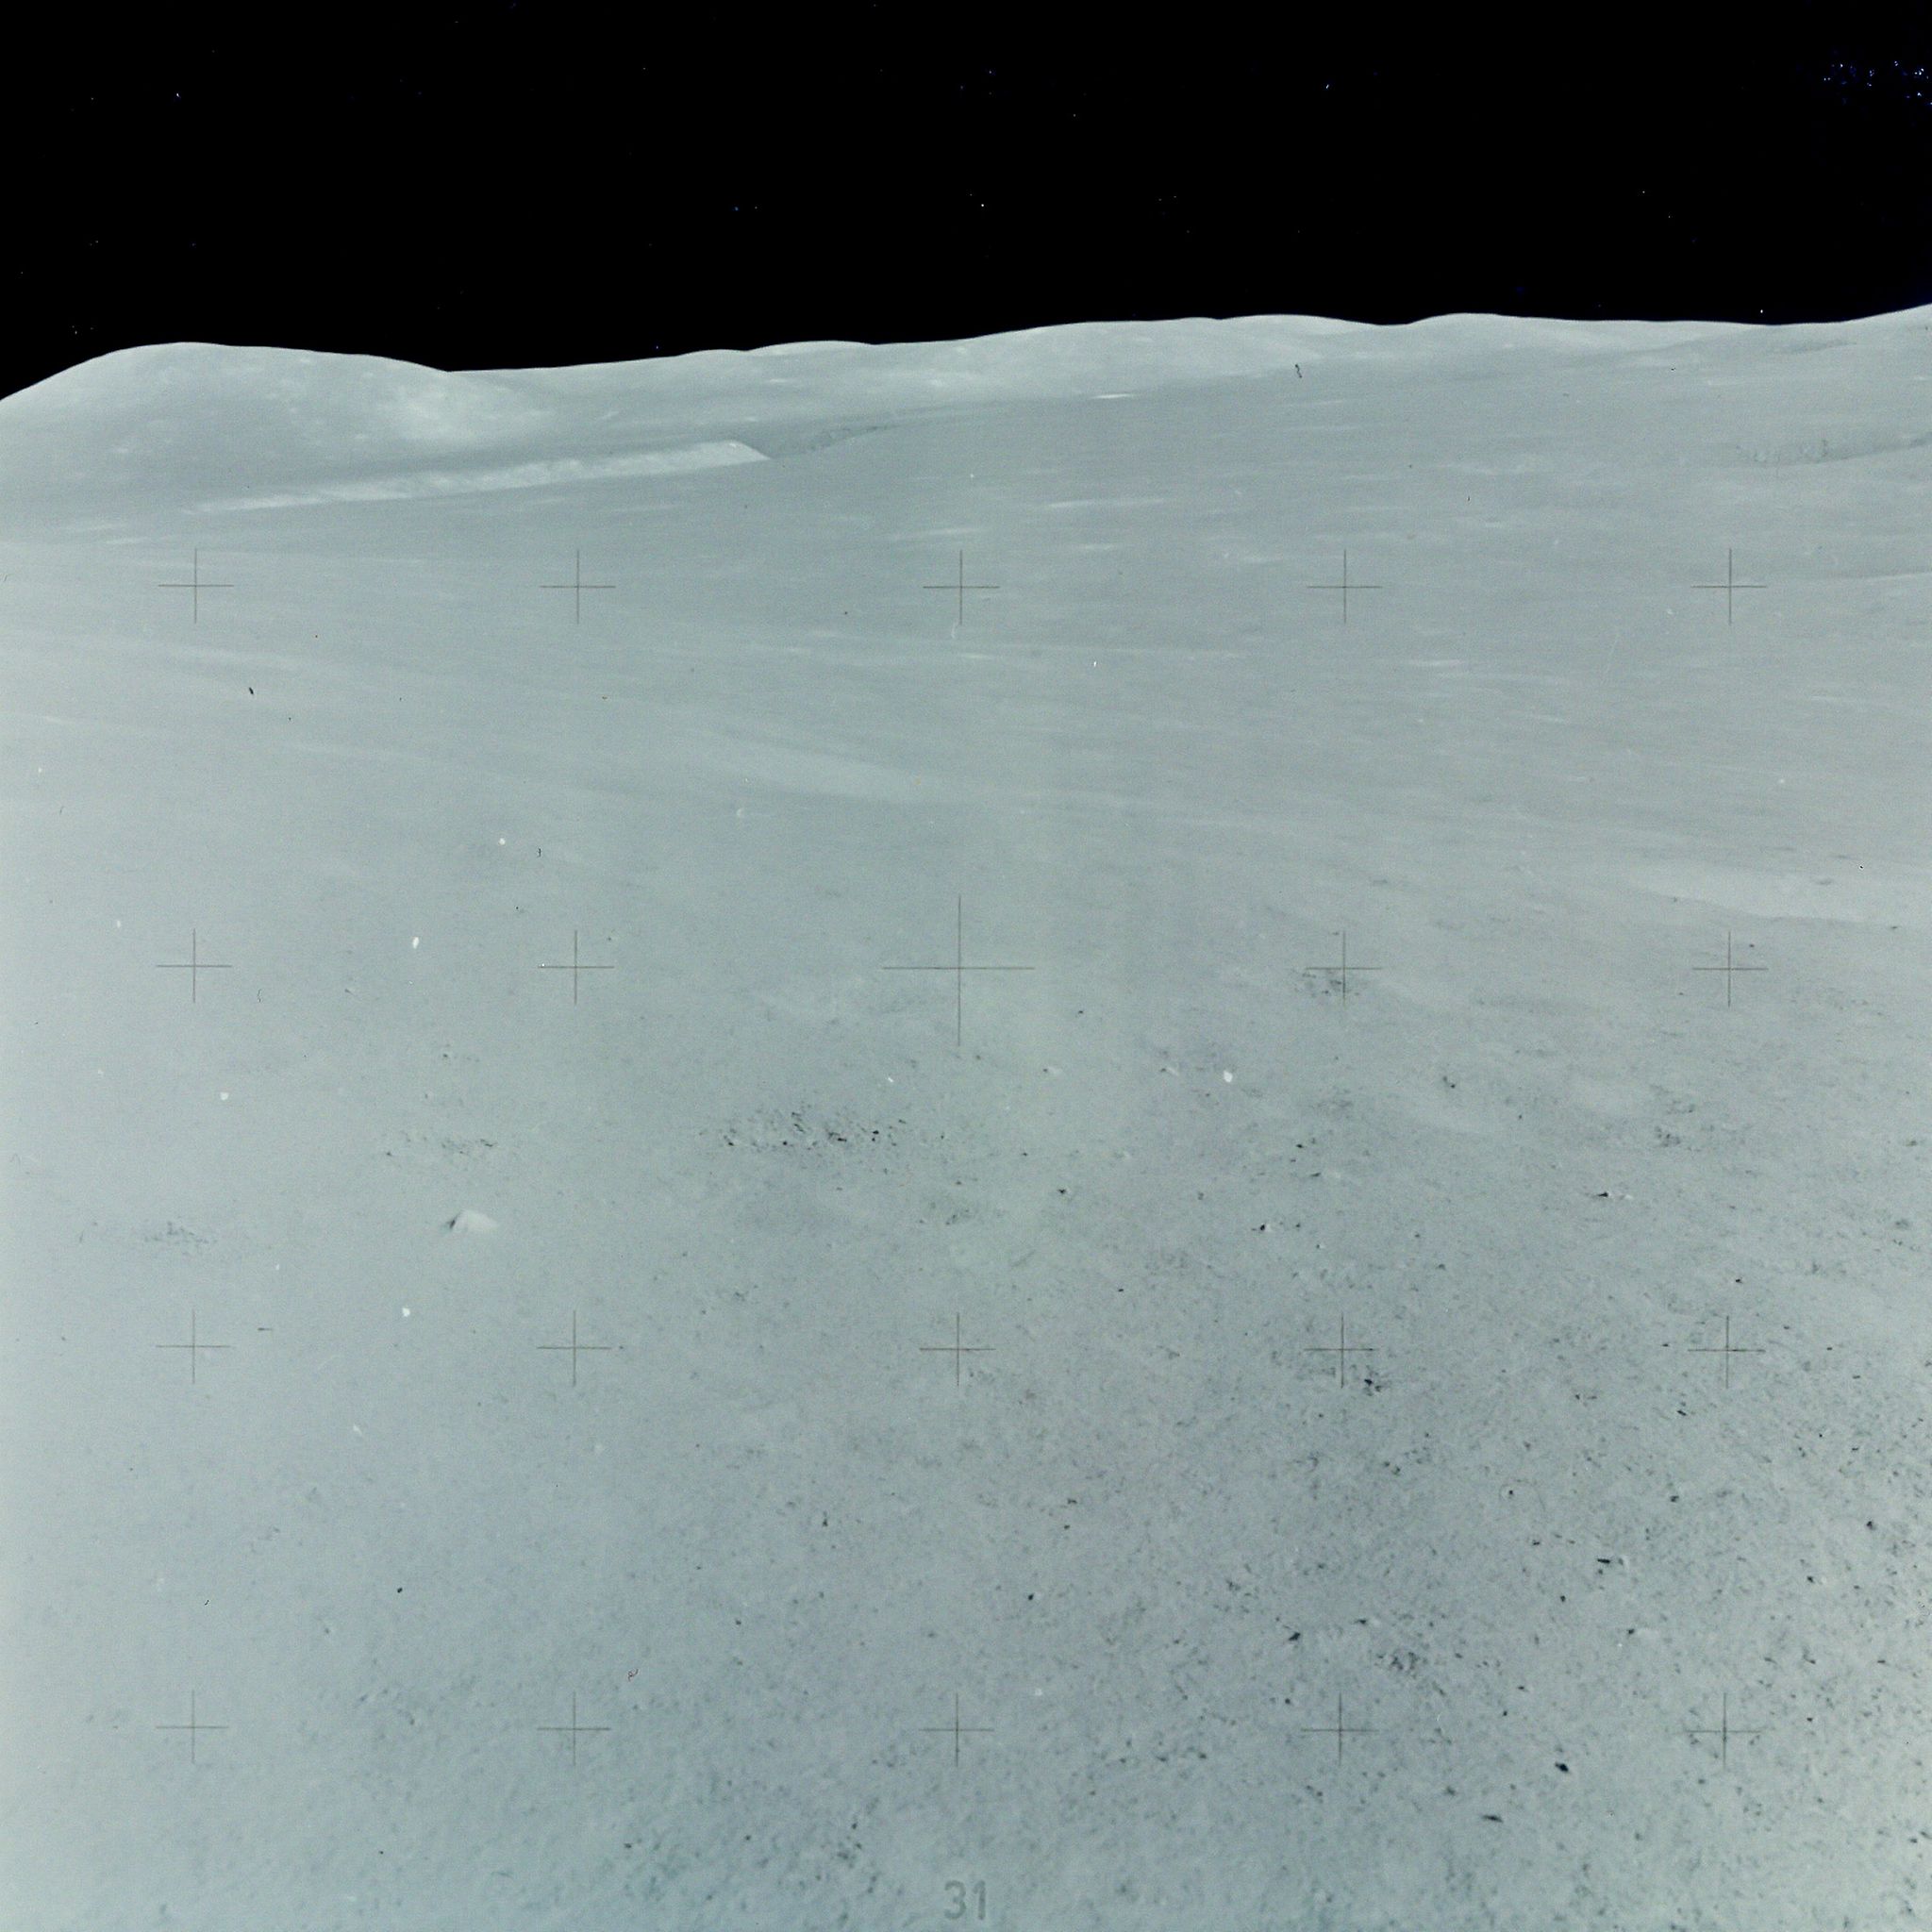 David Scott - Hadley Rille lunar canyon seen on the horizon, EVA 2, Apollo 15, 1971 Vintage